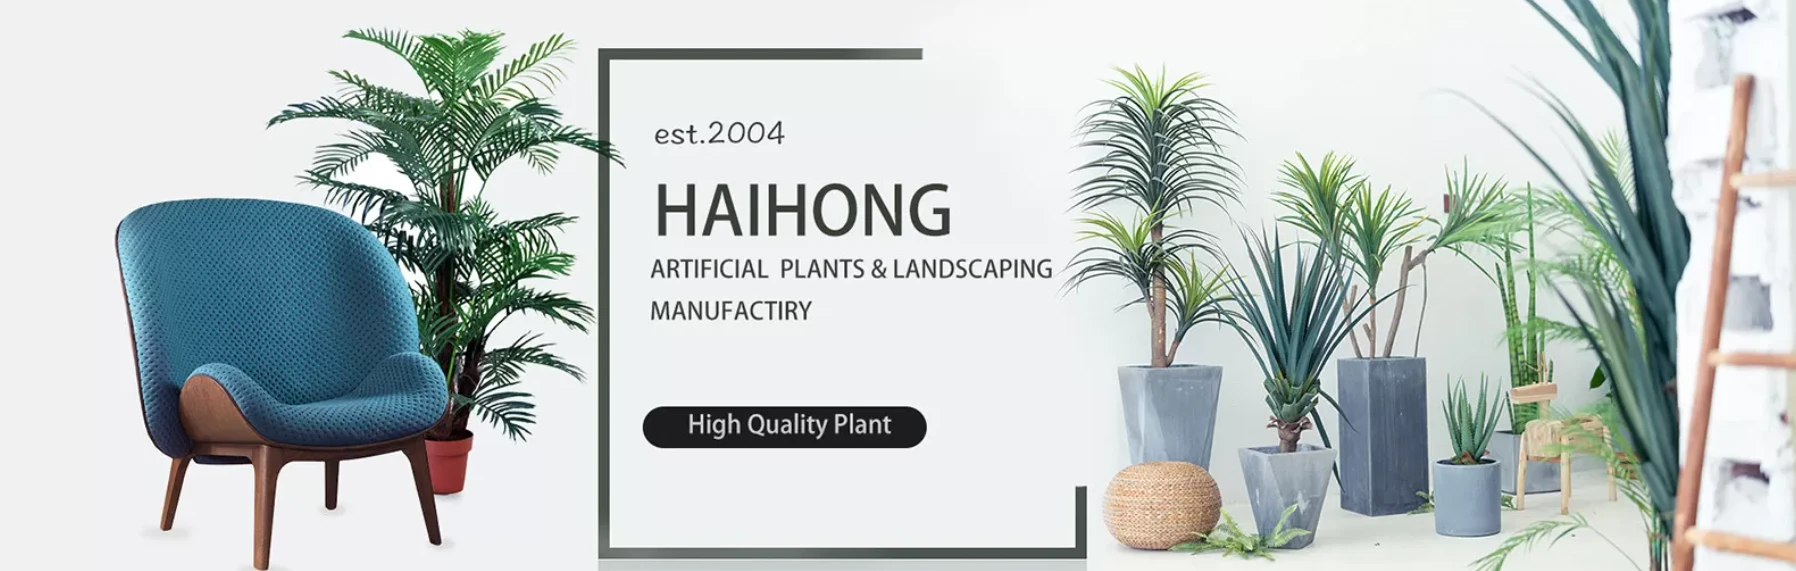 Haihong Artificial Plants & Landscaping Manufactory